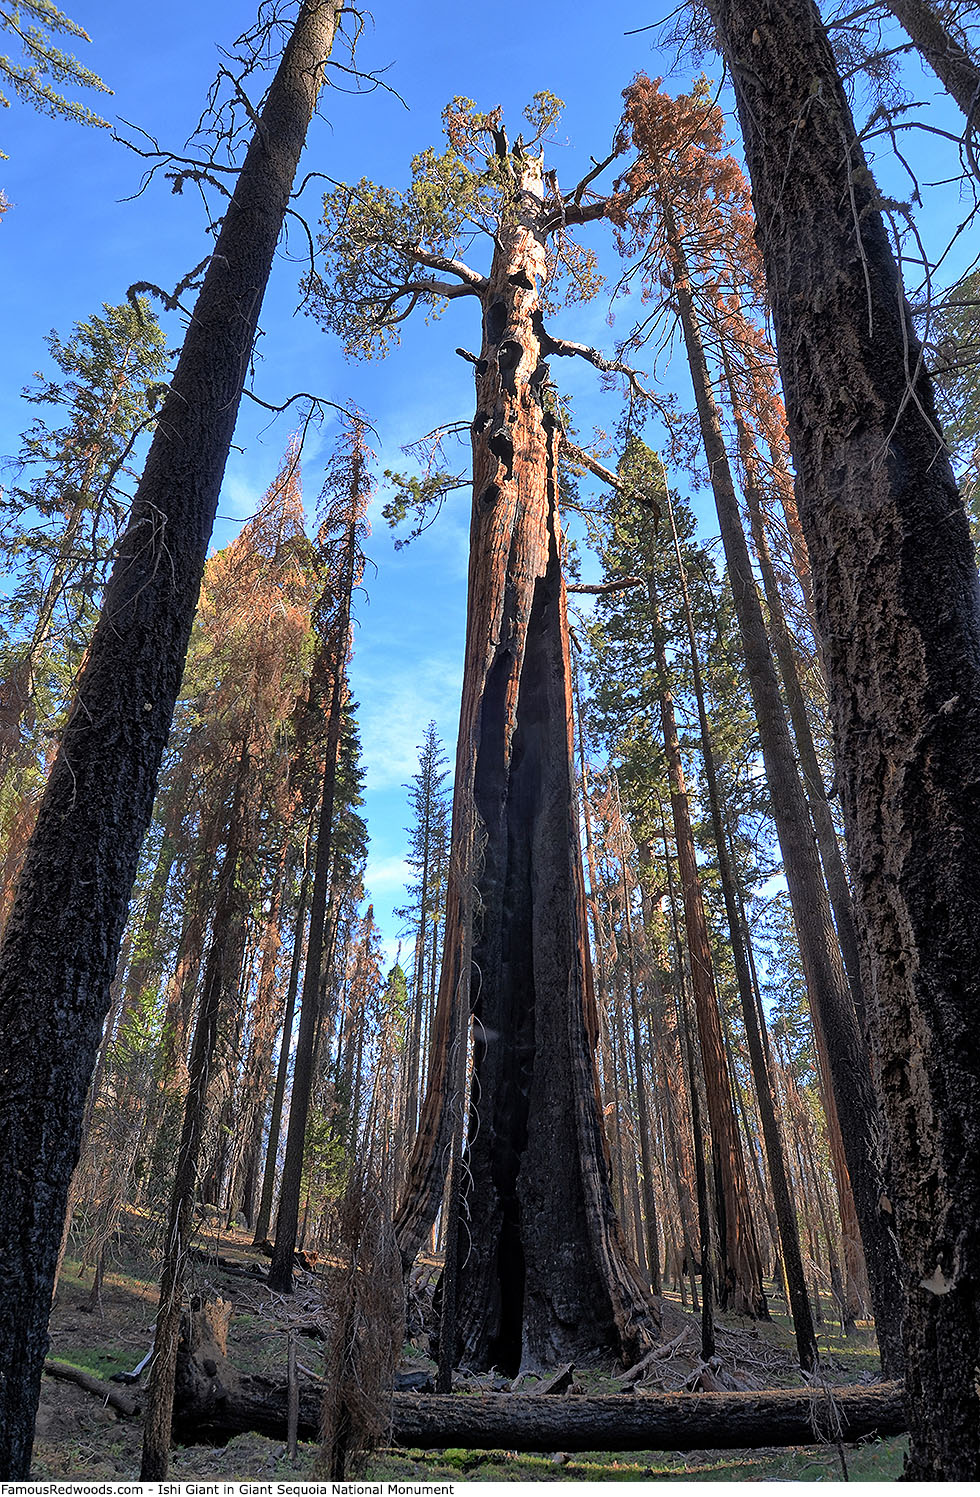 Giant Sequoia National Monument - Ishi Giant Tree